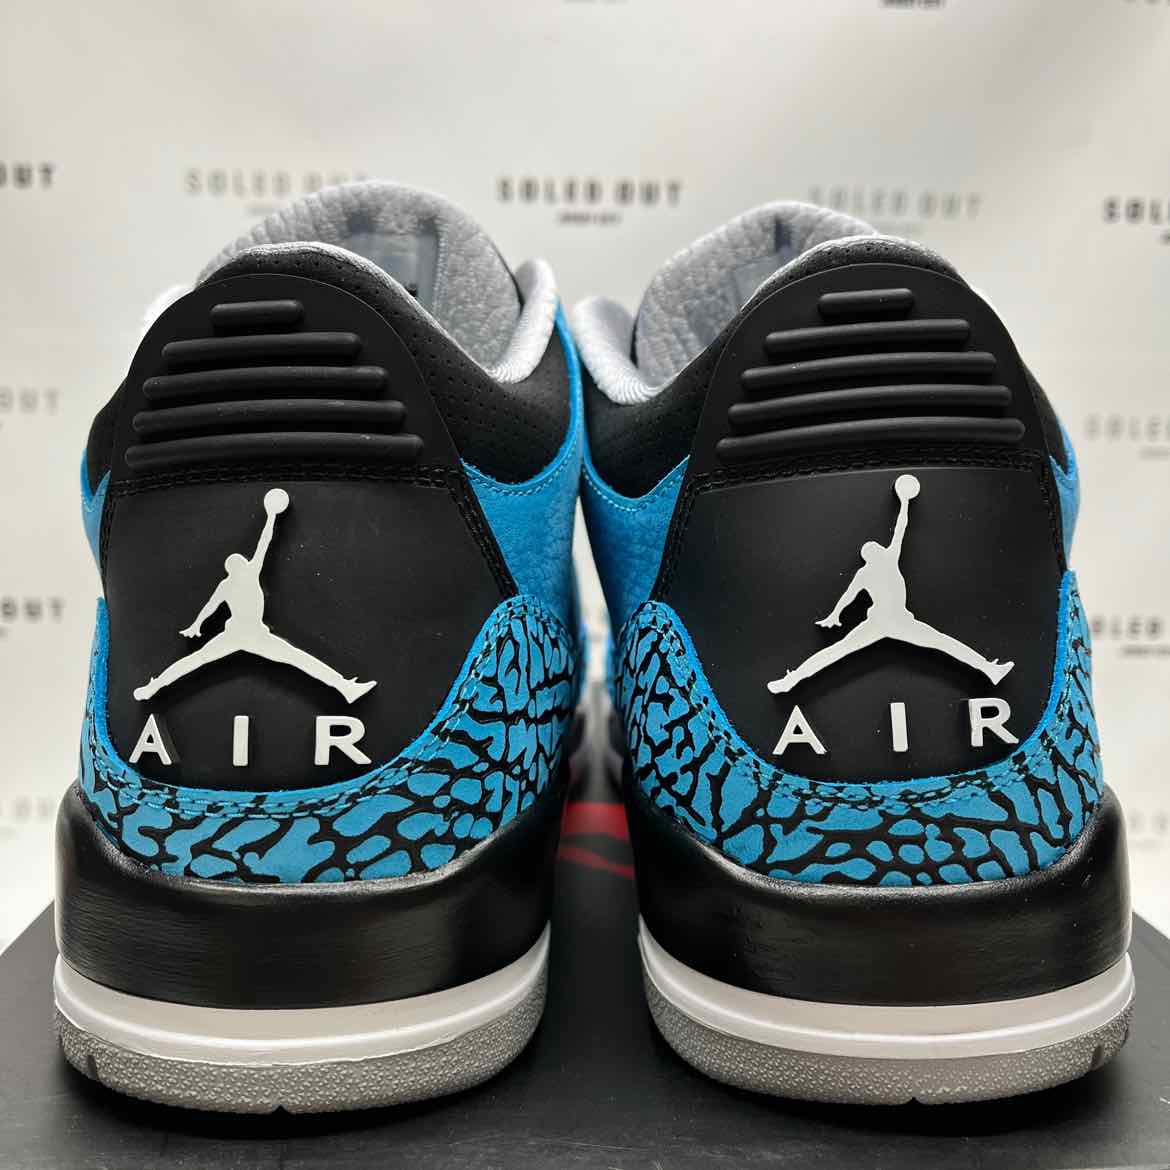 Air Jordan 3 Retro "Powder Blue" 2014 New Size 10